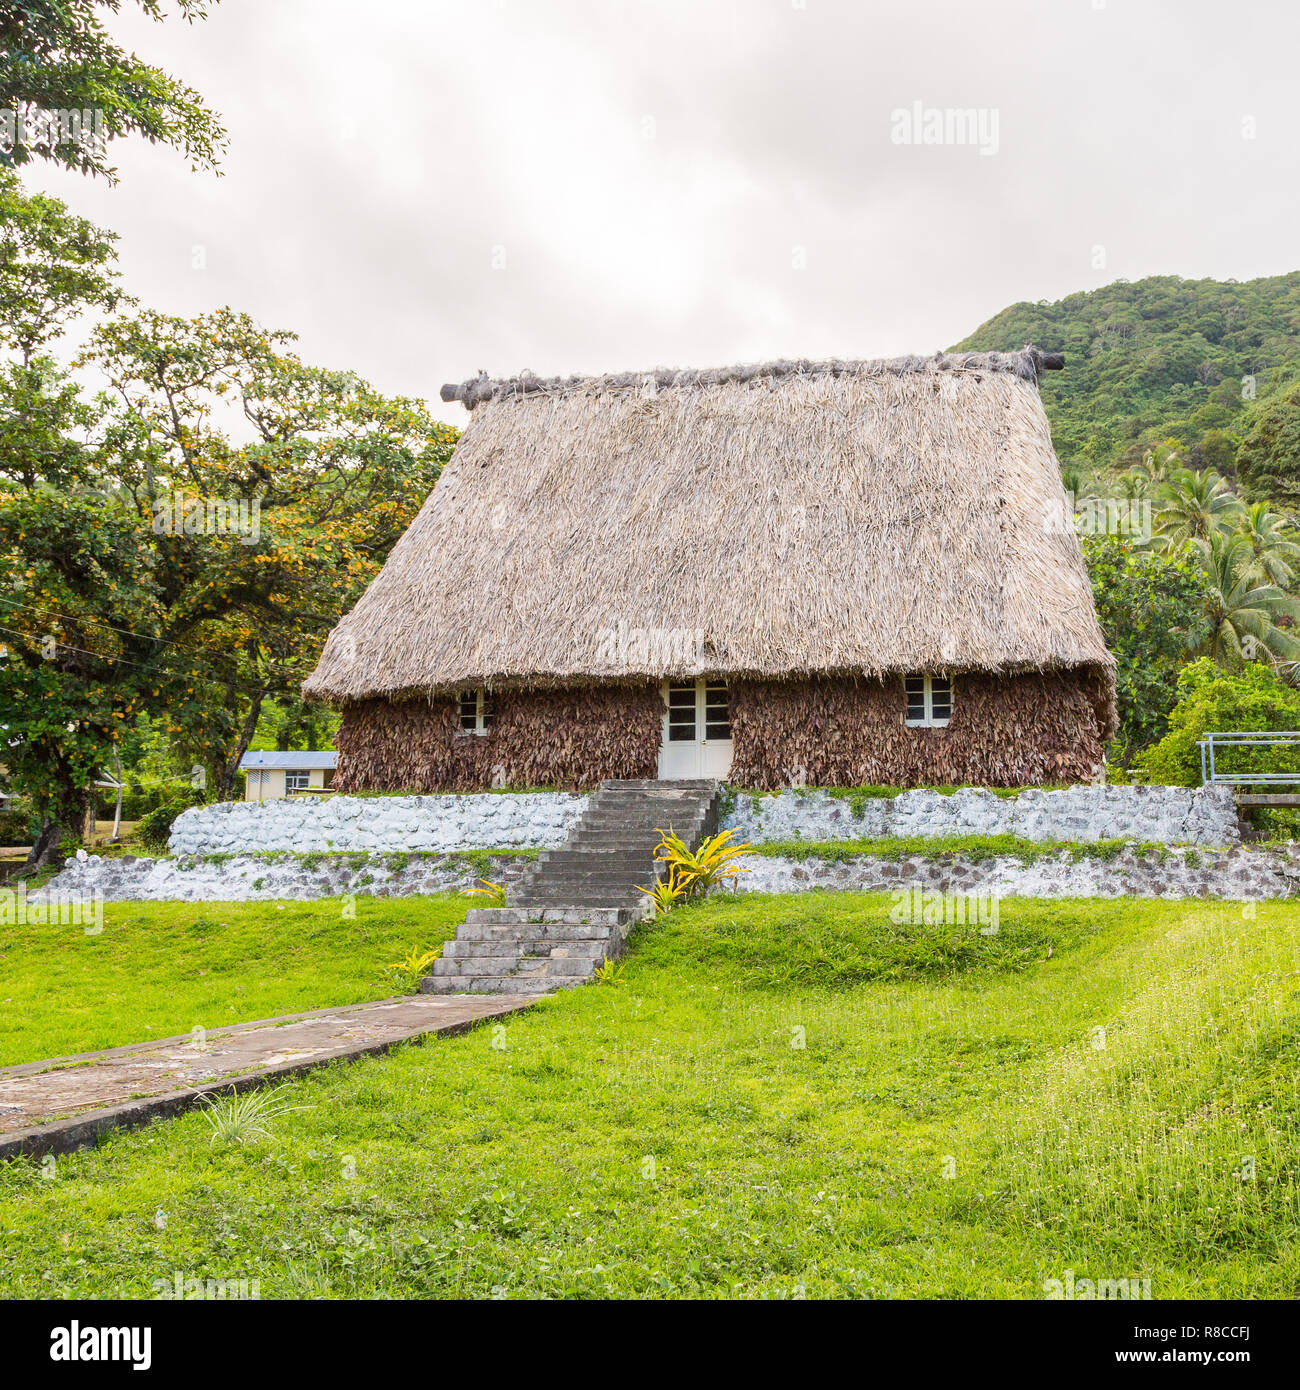 Traditional authentic fijian Bure, wood-and-straw thatched walls and roof hut. Levuka town, Ovalau island, Lomaiviti archipelago, Fiji, Melanesia, Oce Stock Photo